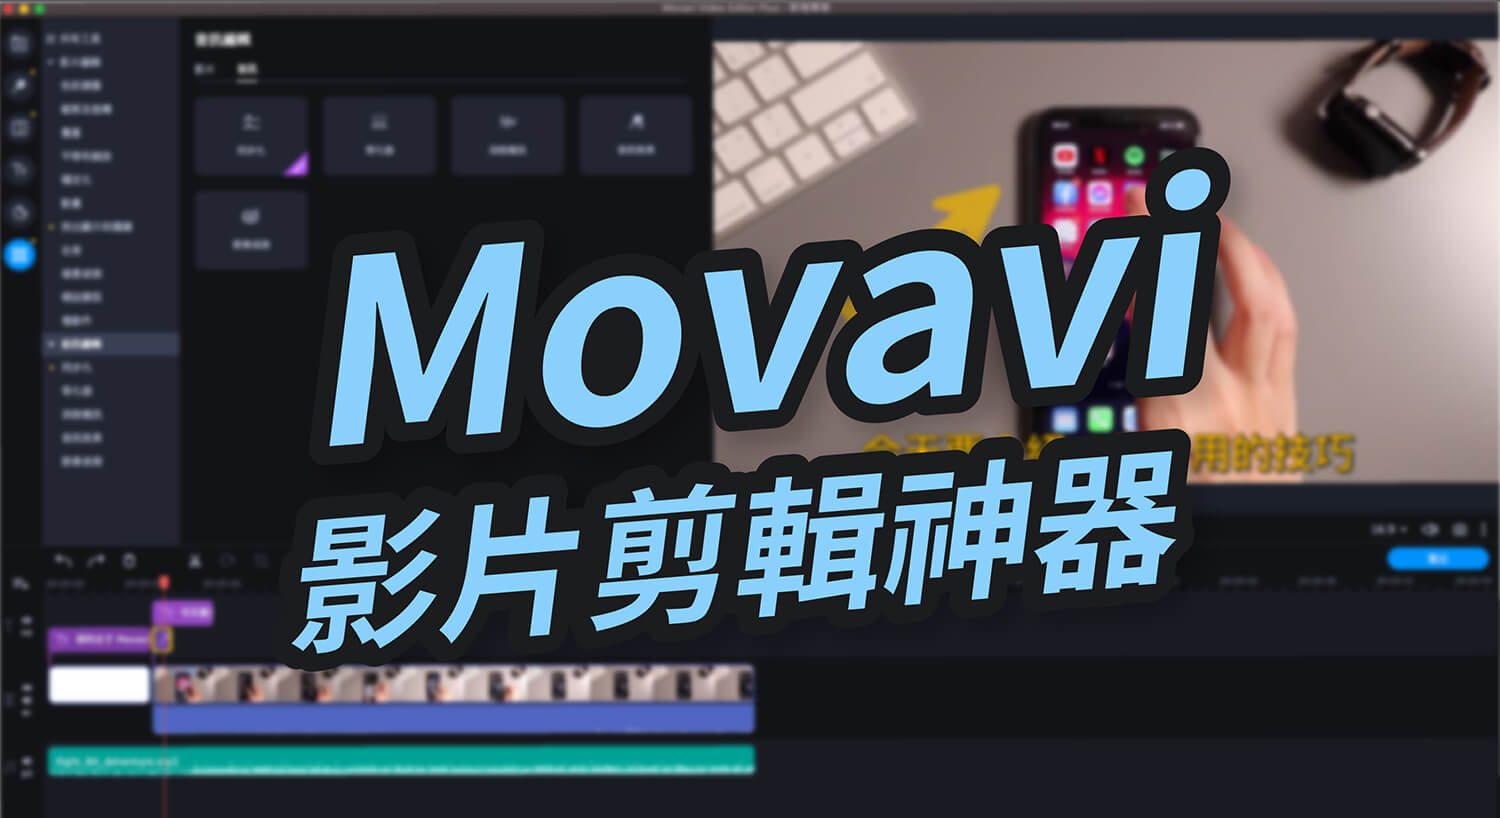 Movavi 影片剪輯軟體，影音創作者必備的剪片神器，功能強大好上手